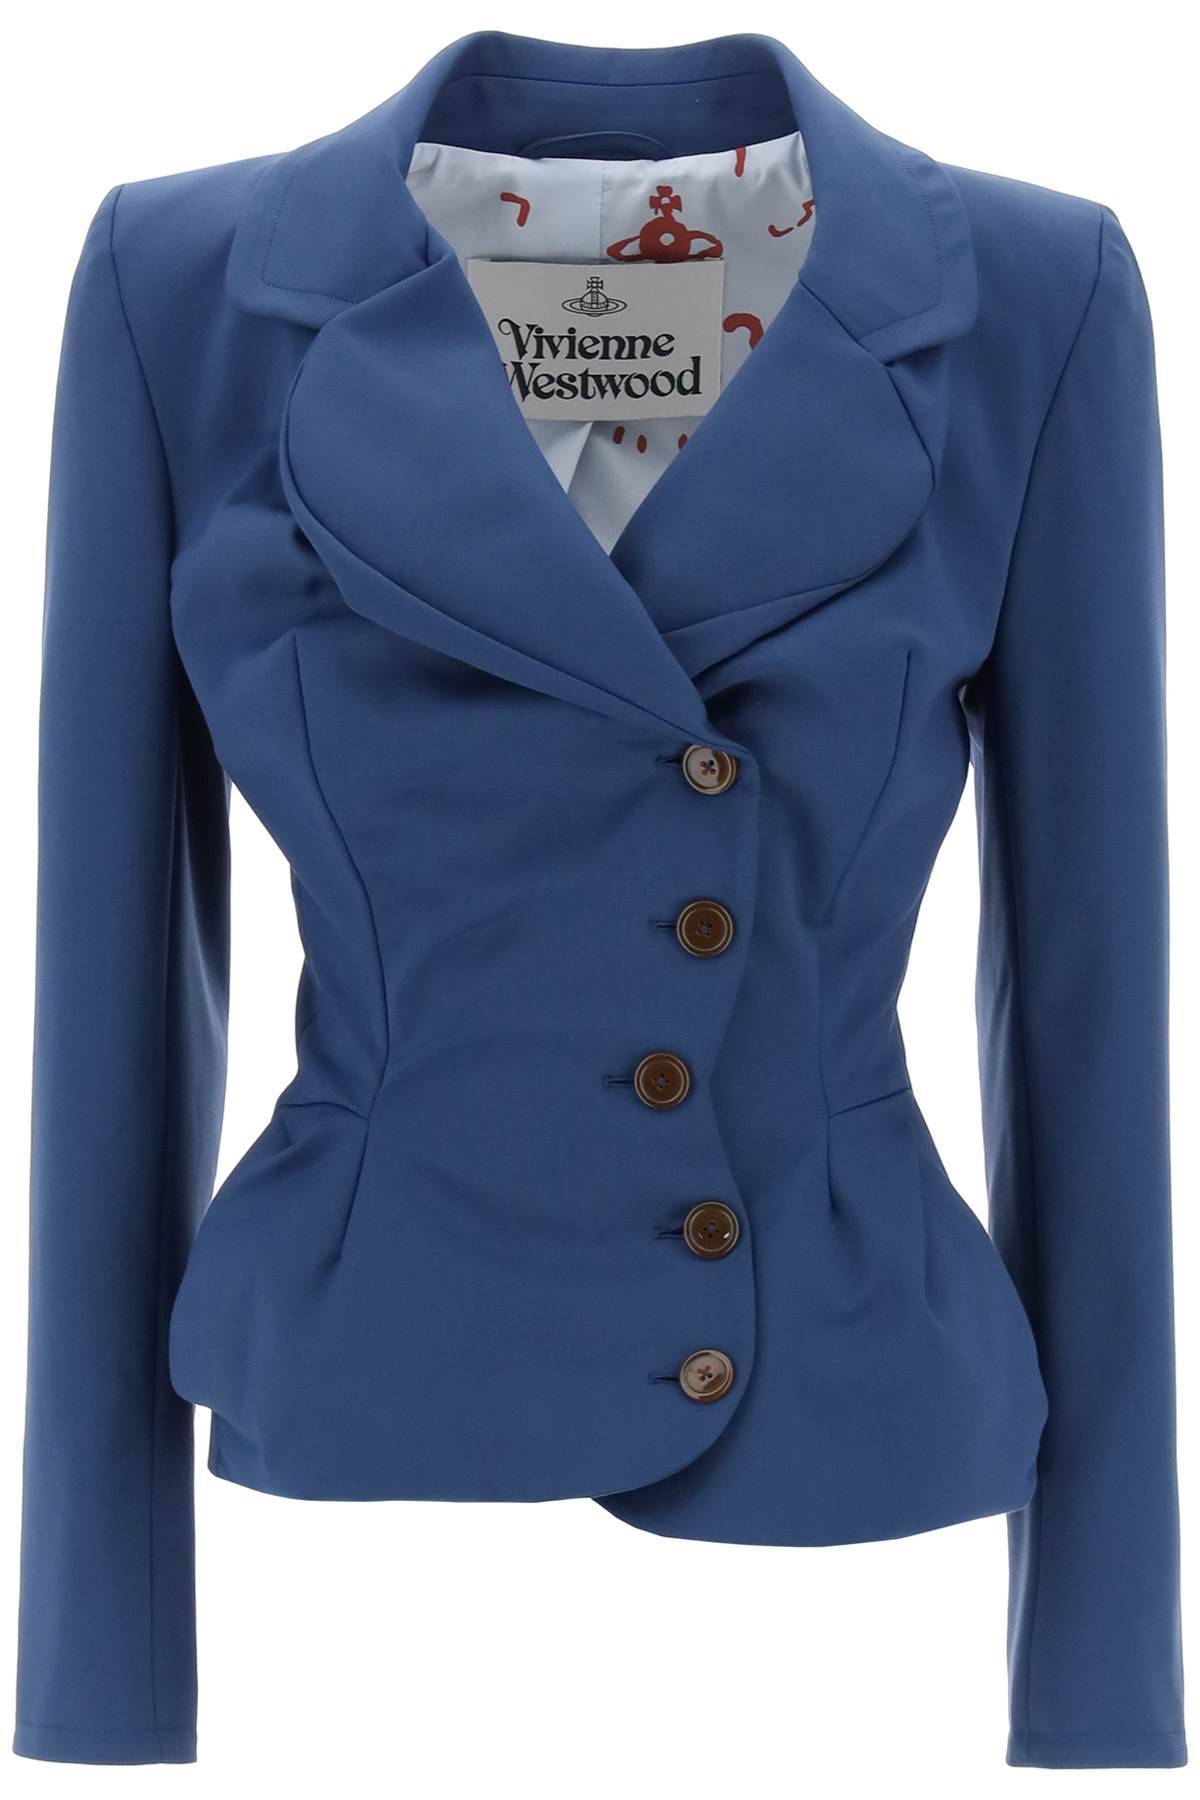 Vivienne Westwood VIVIENNE WESTWOOD drunken tailored draped jacket